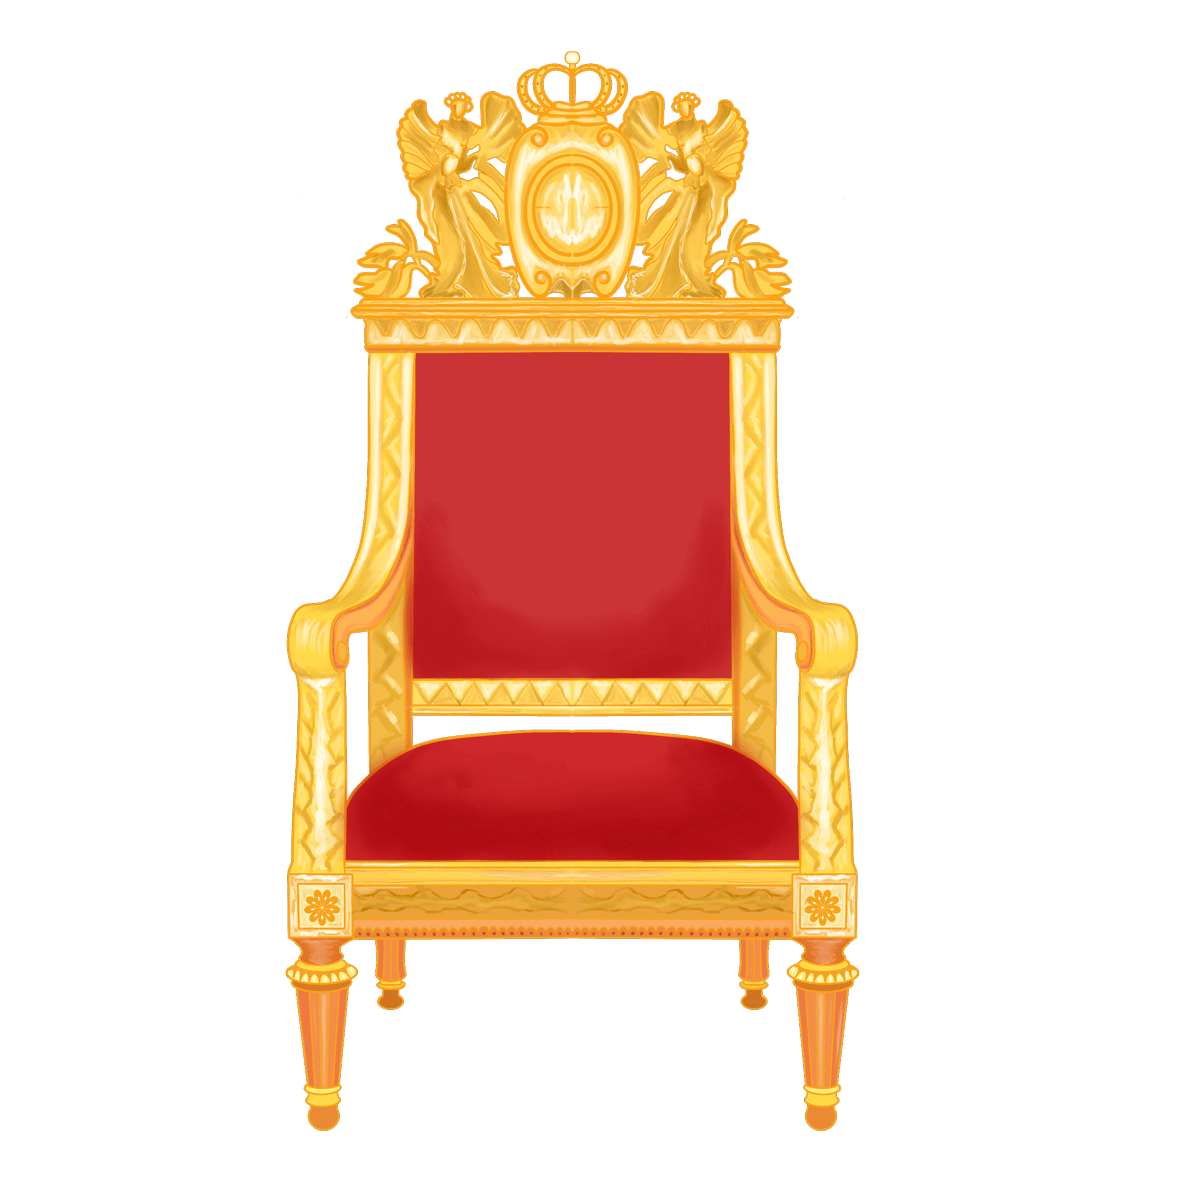 Pngtreeking throne clip art 5827267